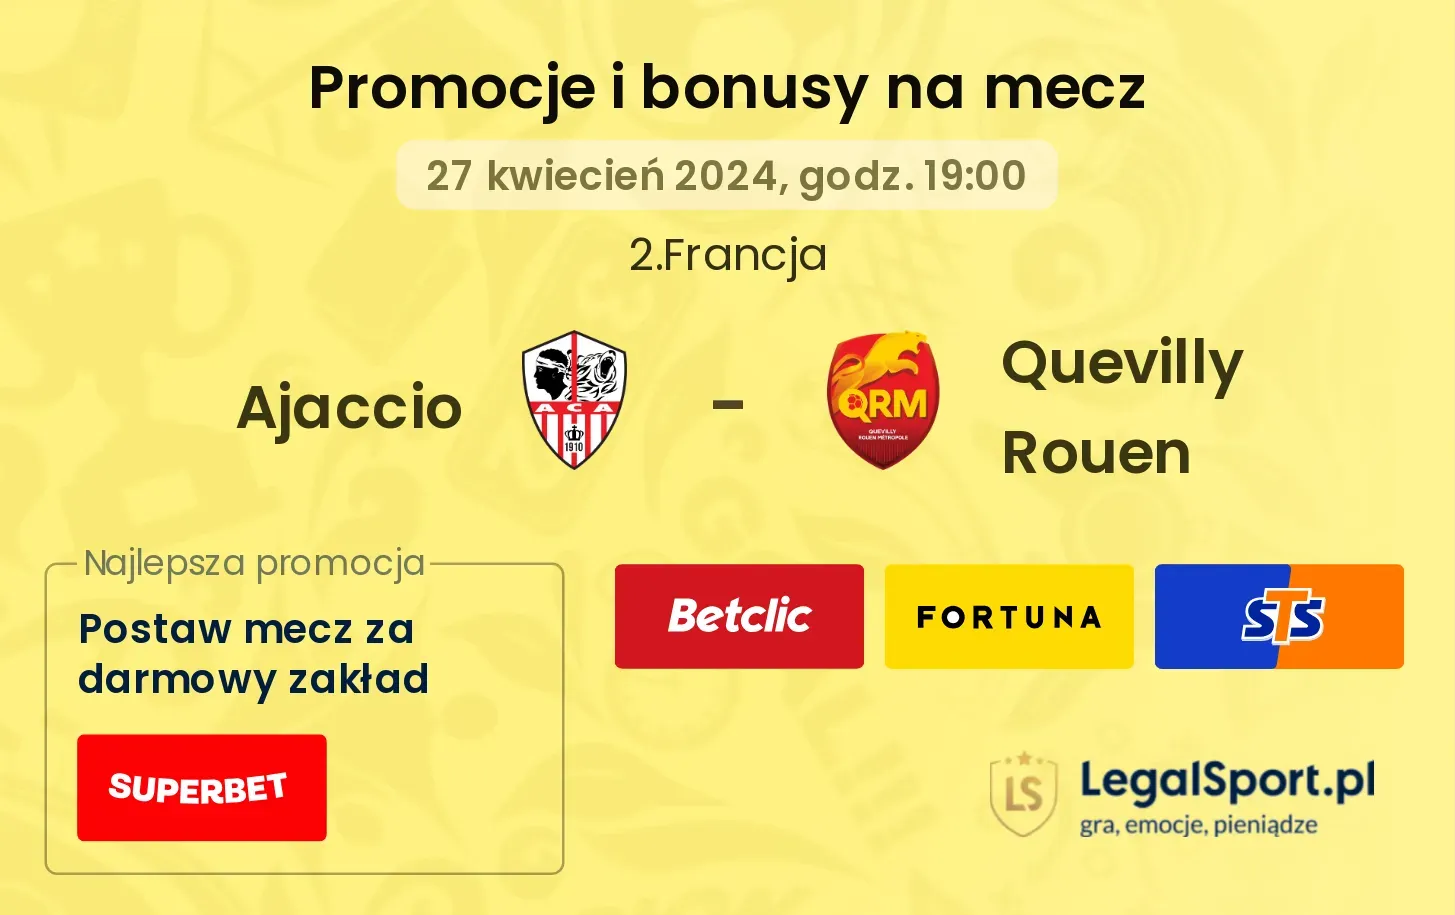 Ajaccio - Quevilly Rouen promocje bonusy na mecz